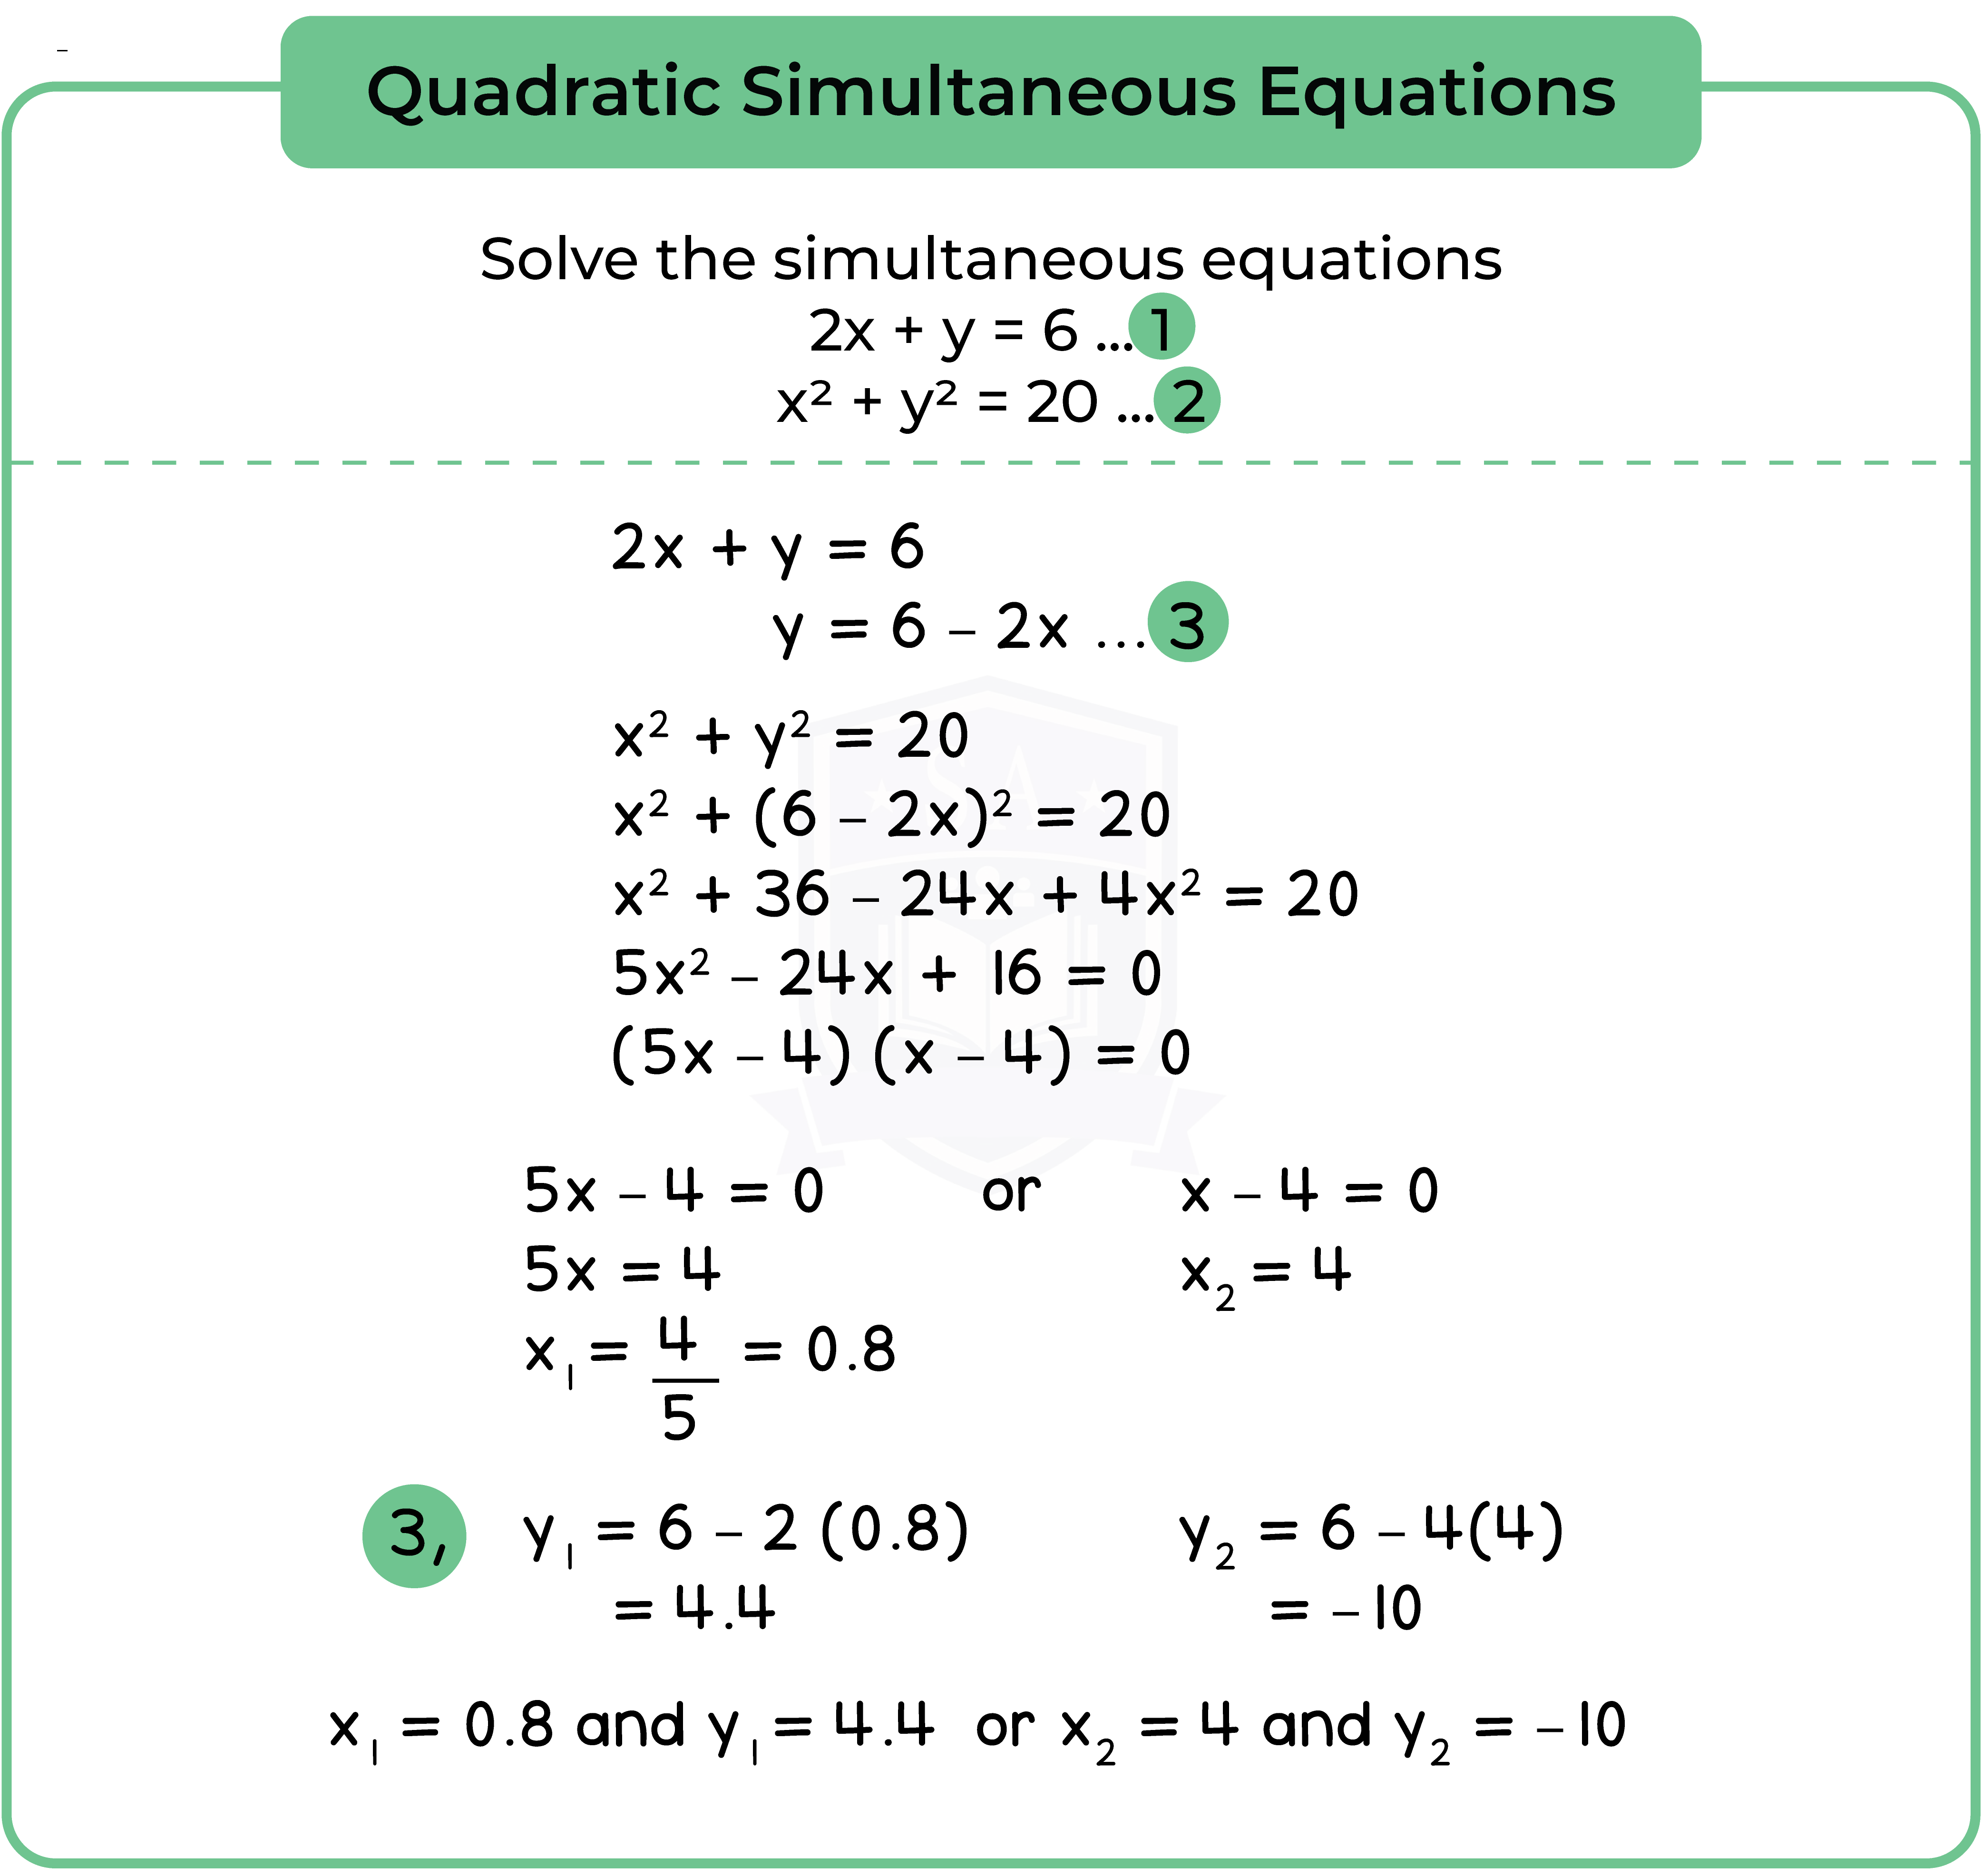 edexcel_igcse_mathematics a_topic 18_quadratic equations_009_Quadratic Simultaneous Equation